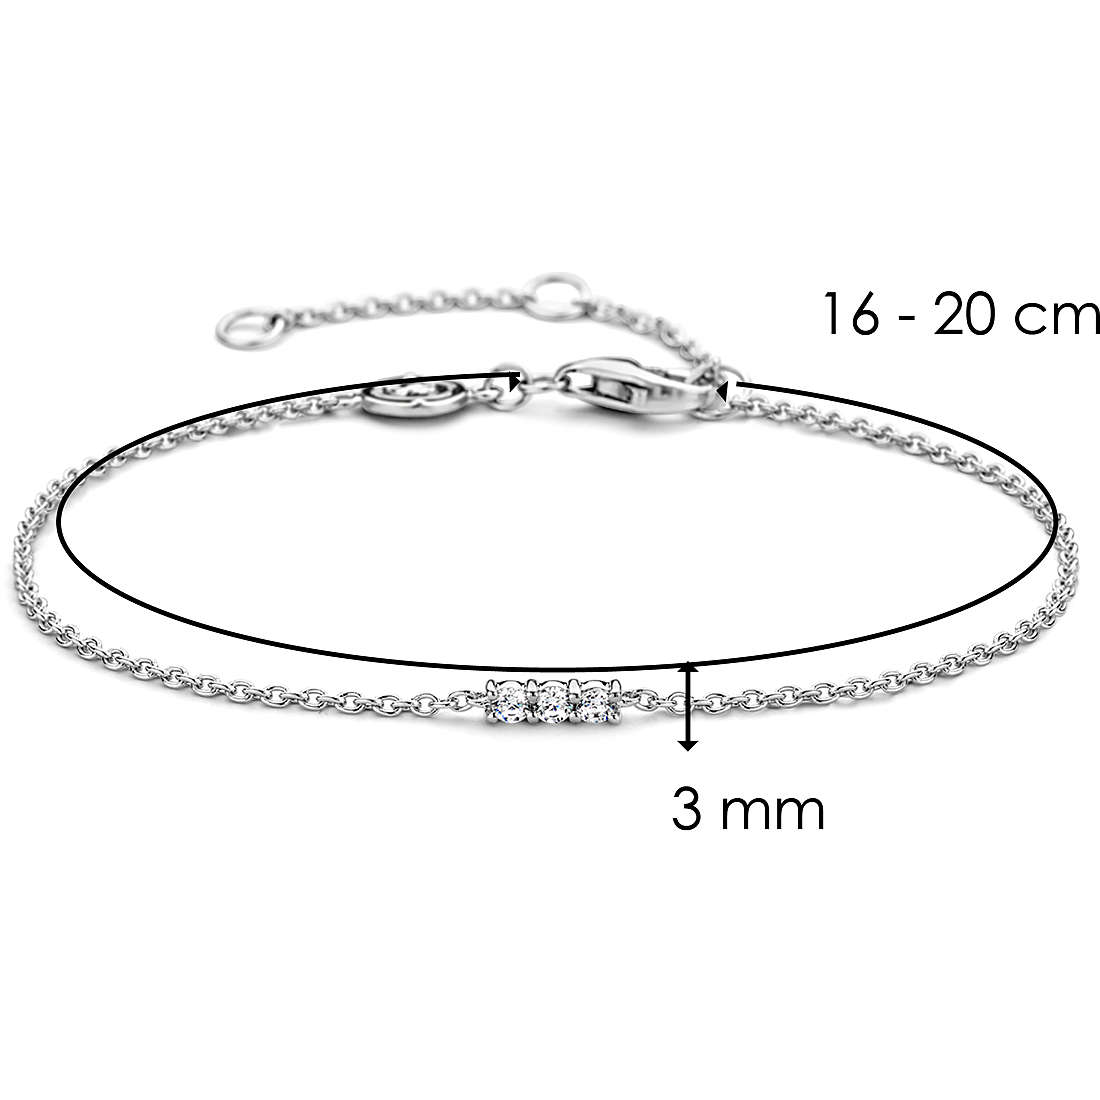 bracelet woman jewellery TI SENTO MILANO 2975ZI